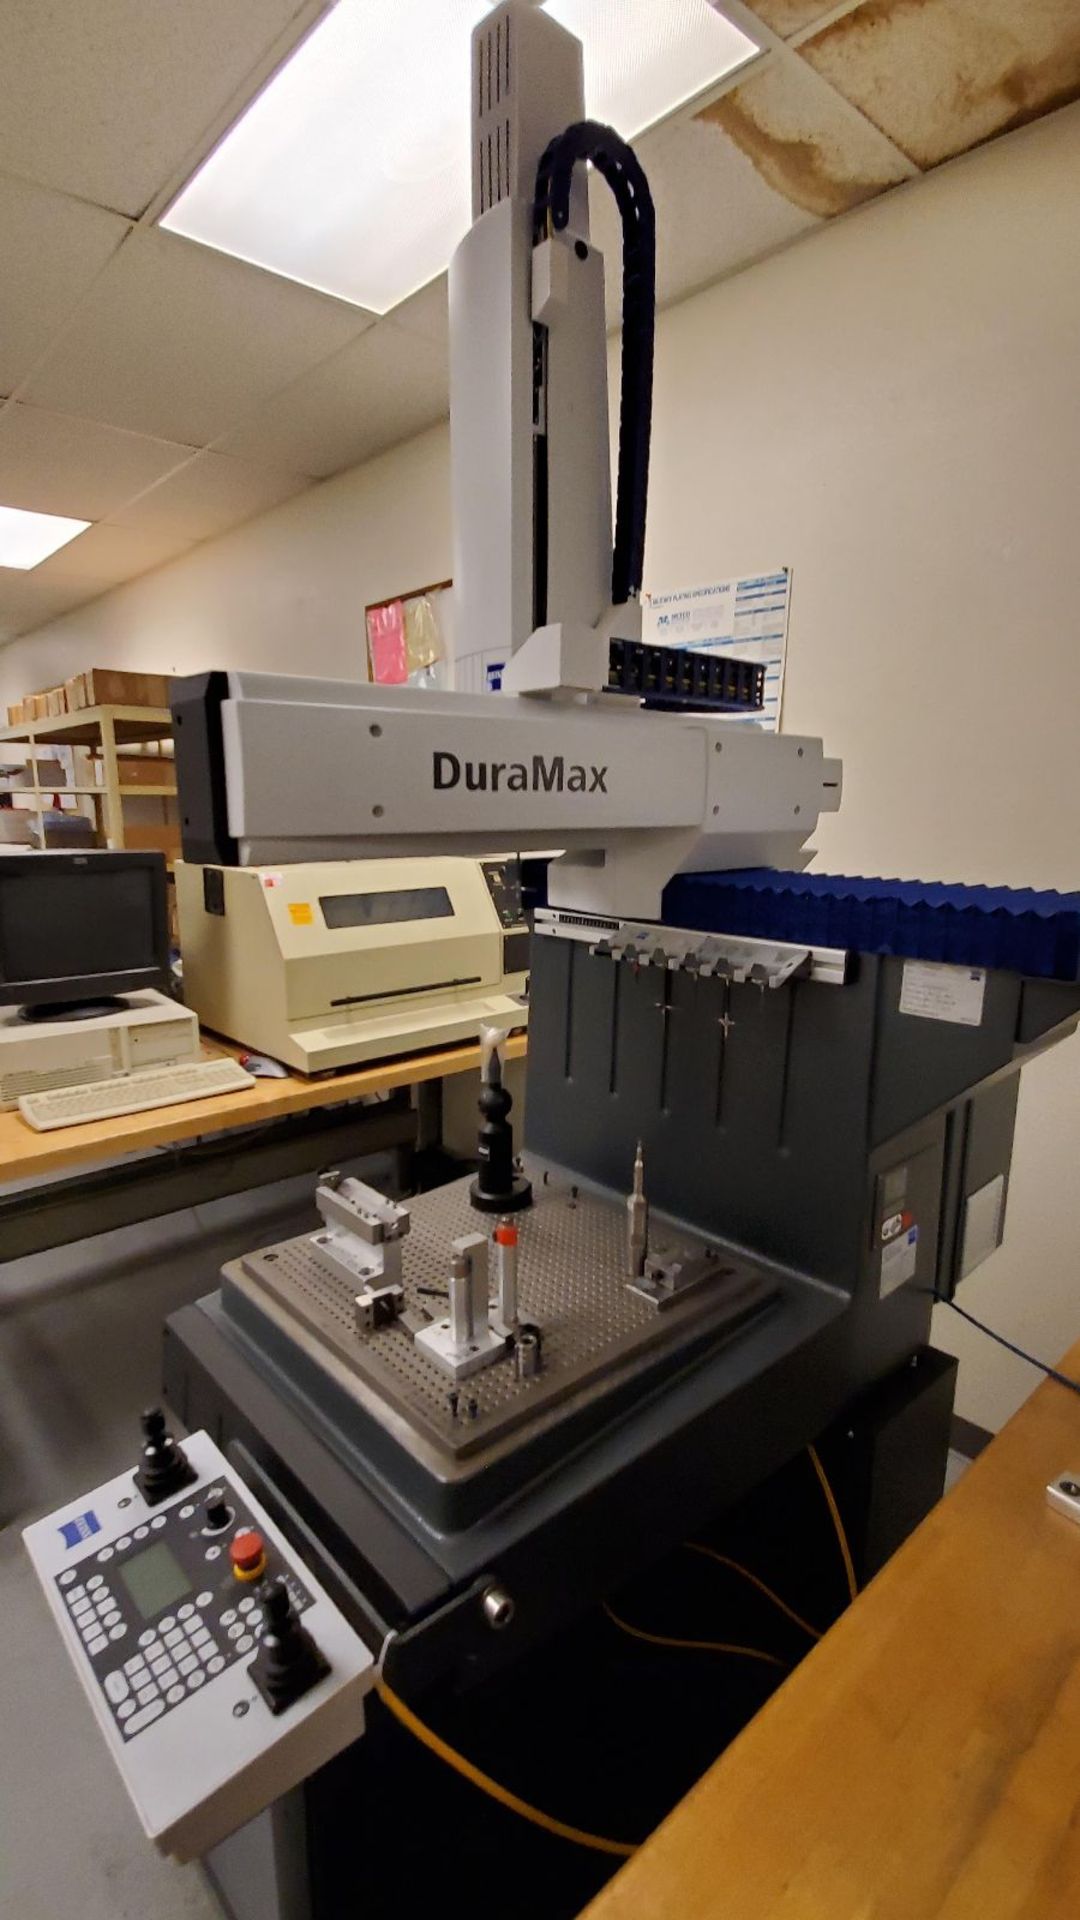 Zeiss Model DuraMax 5/5/5 Coordinate Measuring Machine